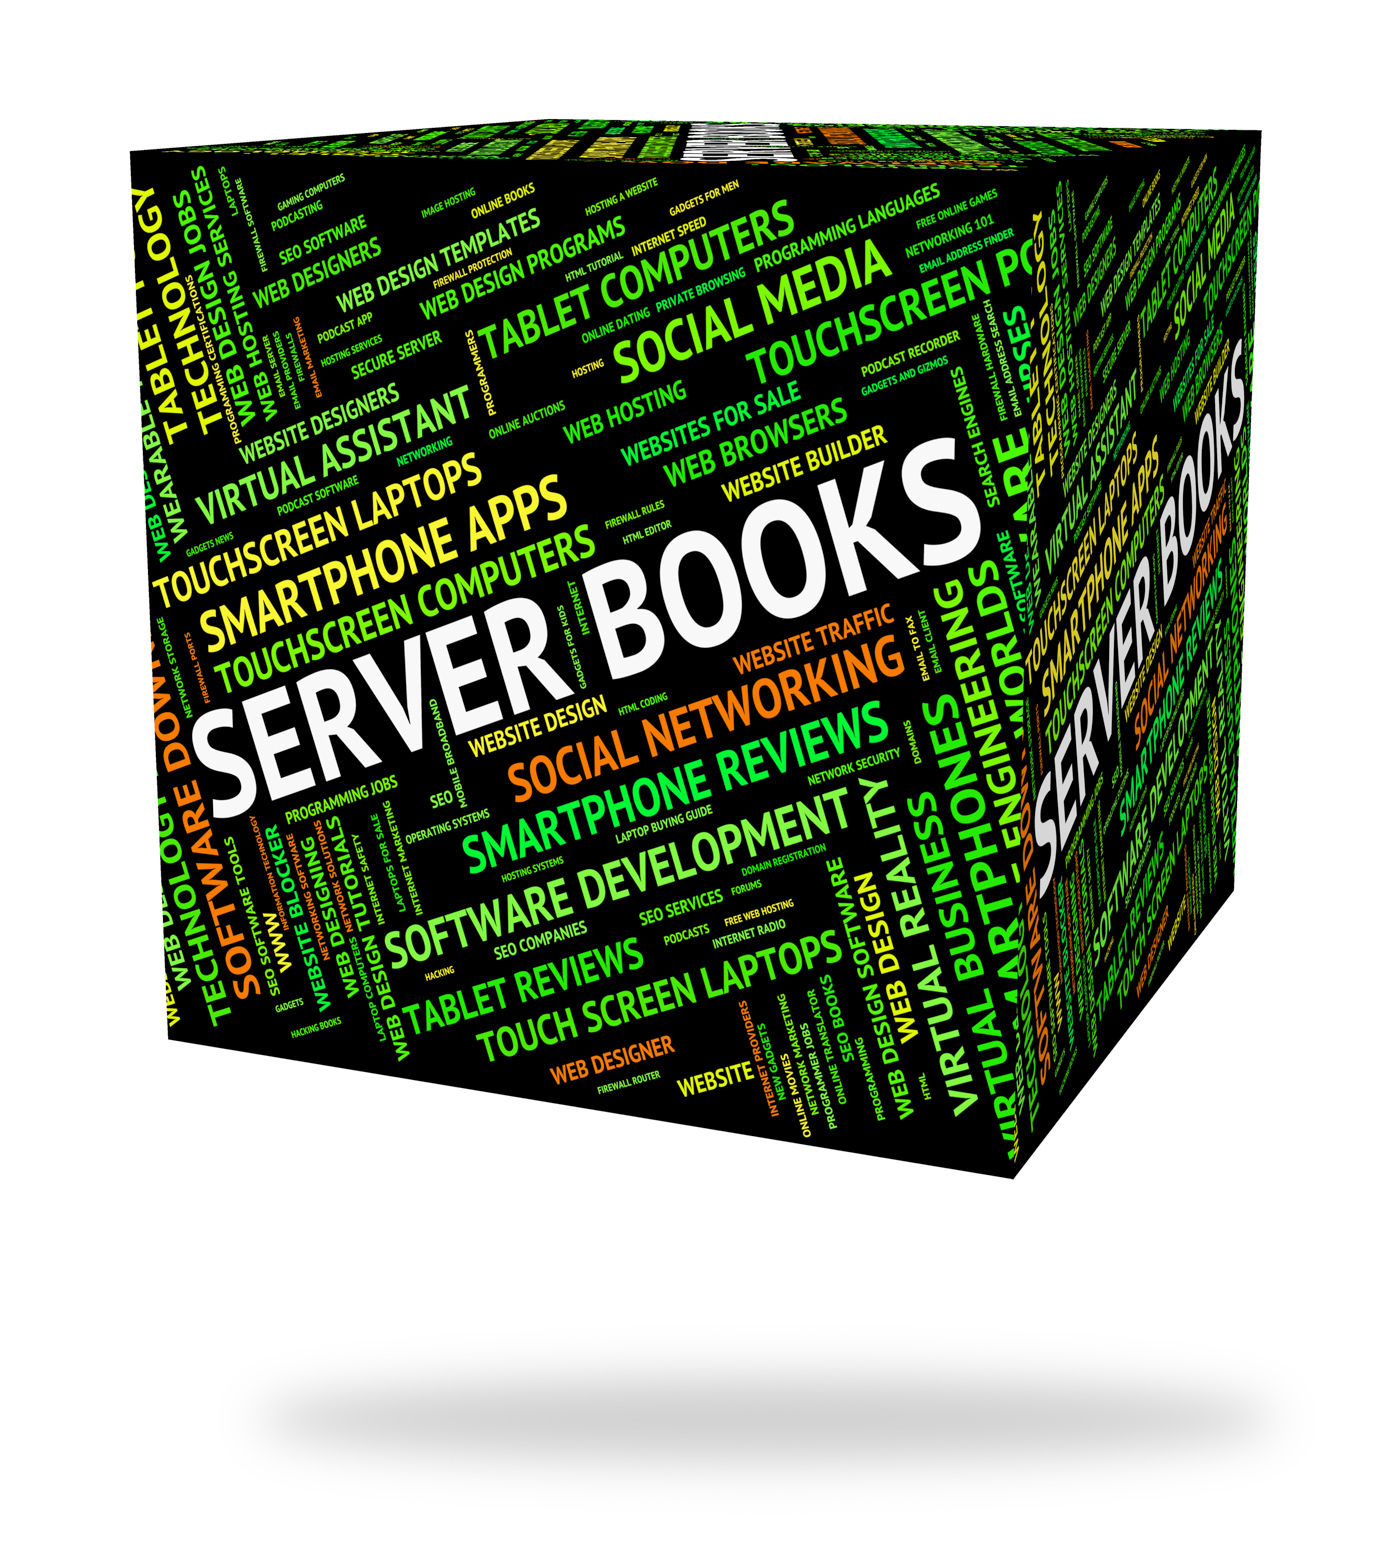 Server books indicates computer servers and fiction photo